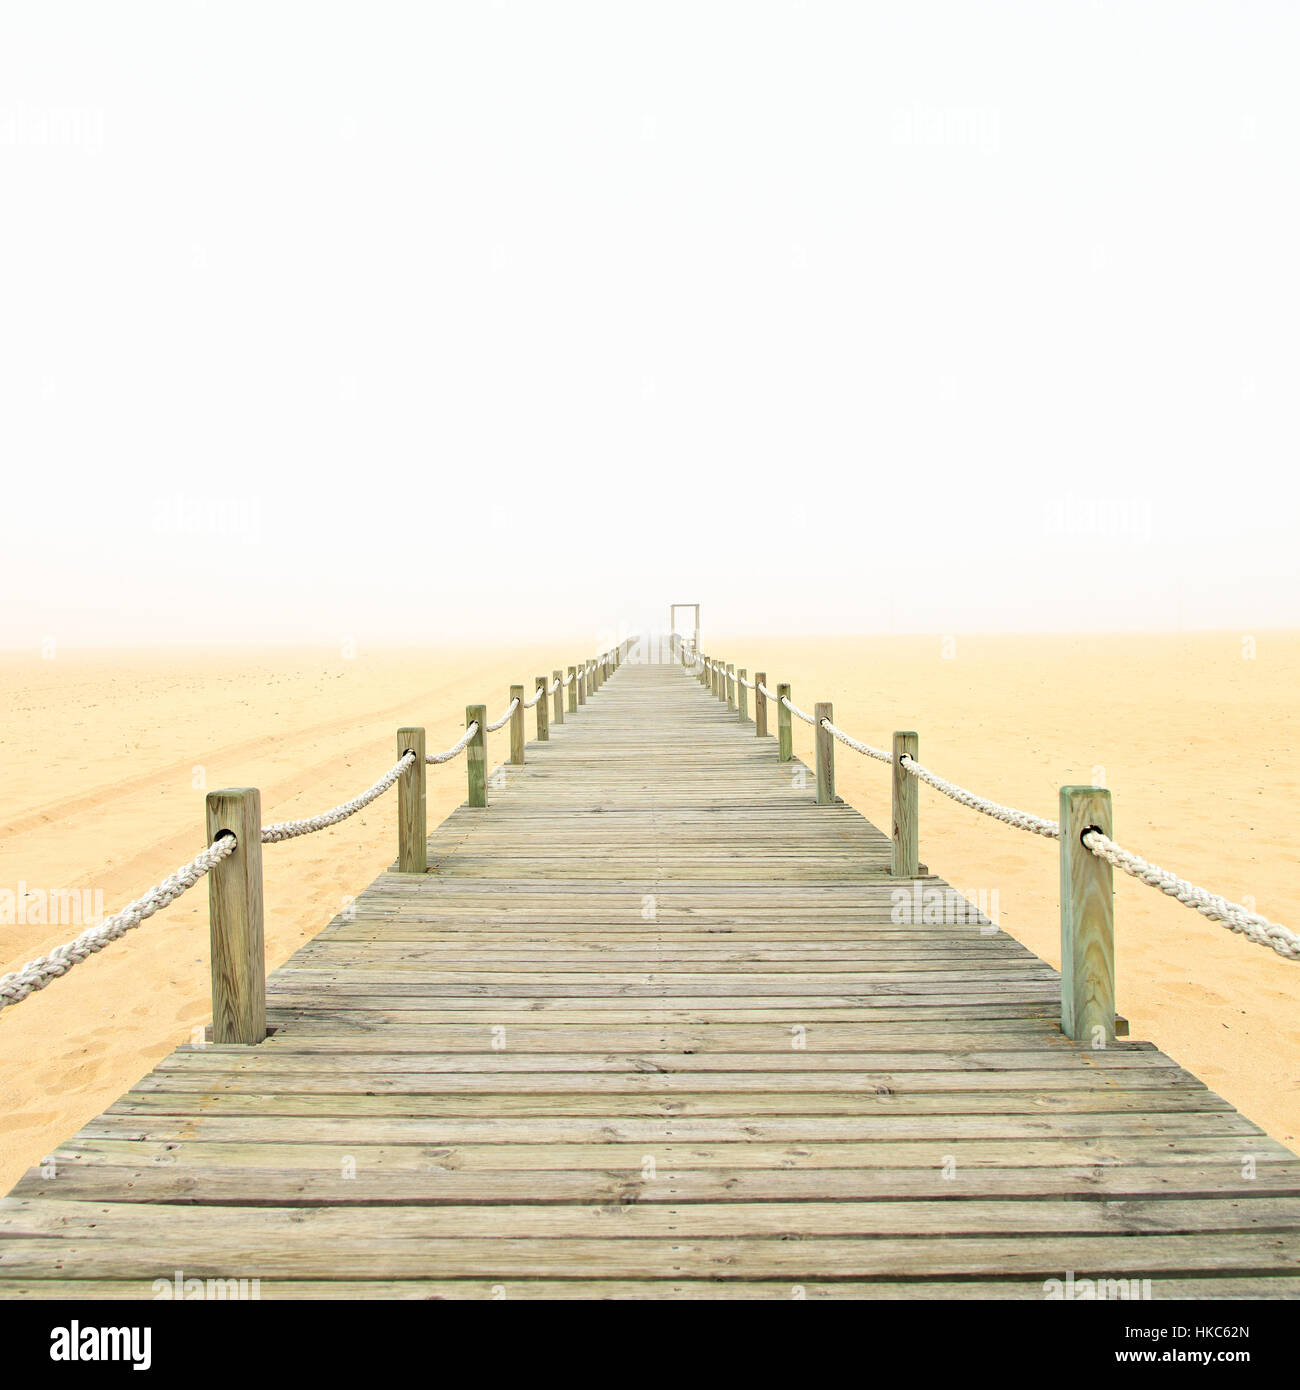 Wooden footbridge on a foggy sand beach. Figueira da Foz, Portugal, Europe. Stock Photo